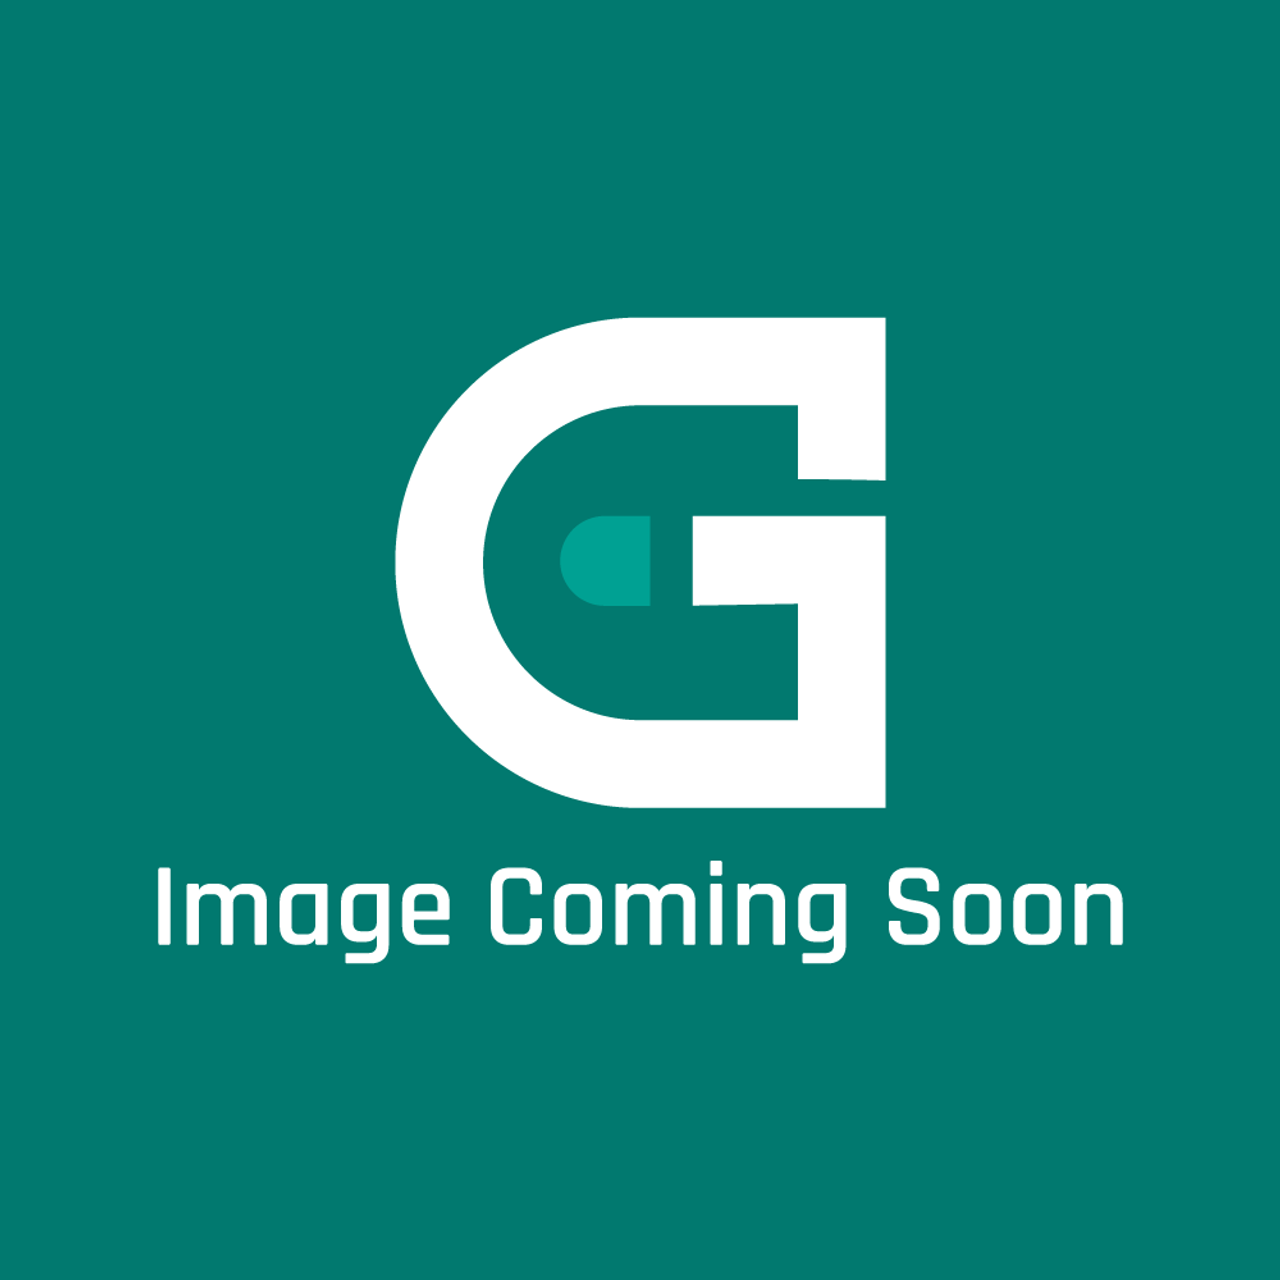 Jade Range 2500127626 - Kit, S Grate Titan - Image Coming Soon!